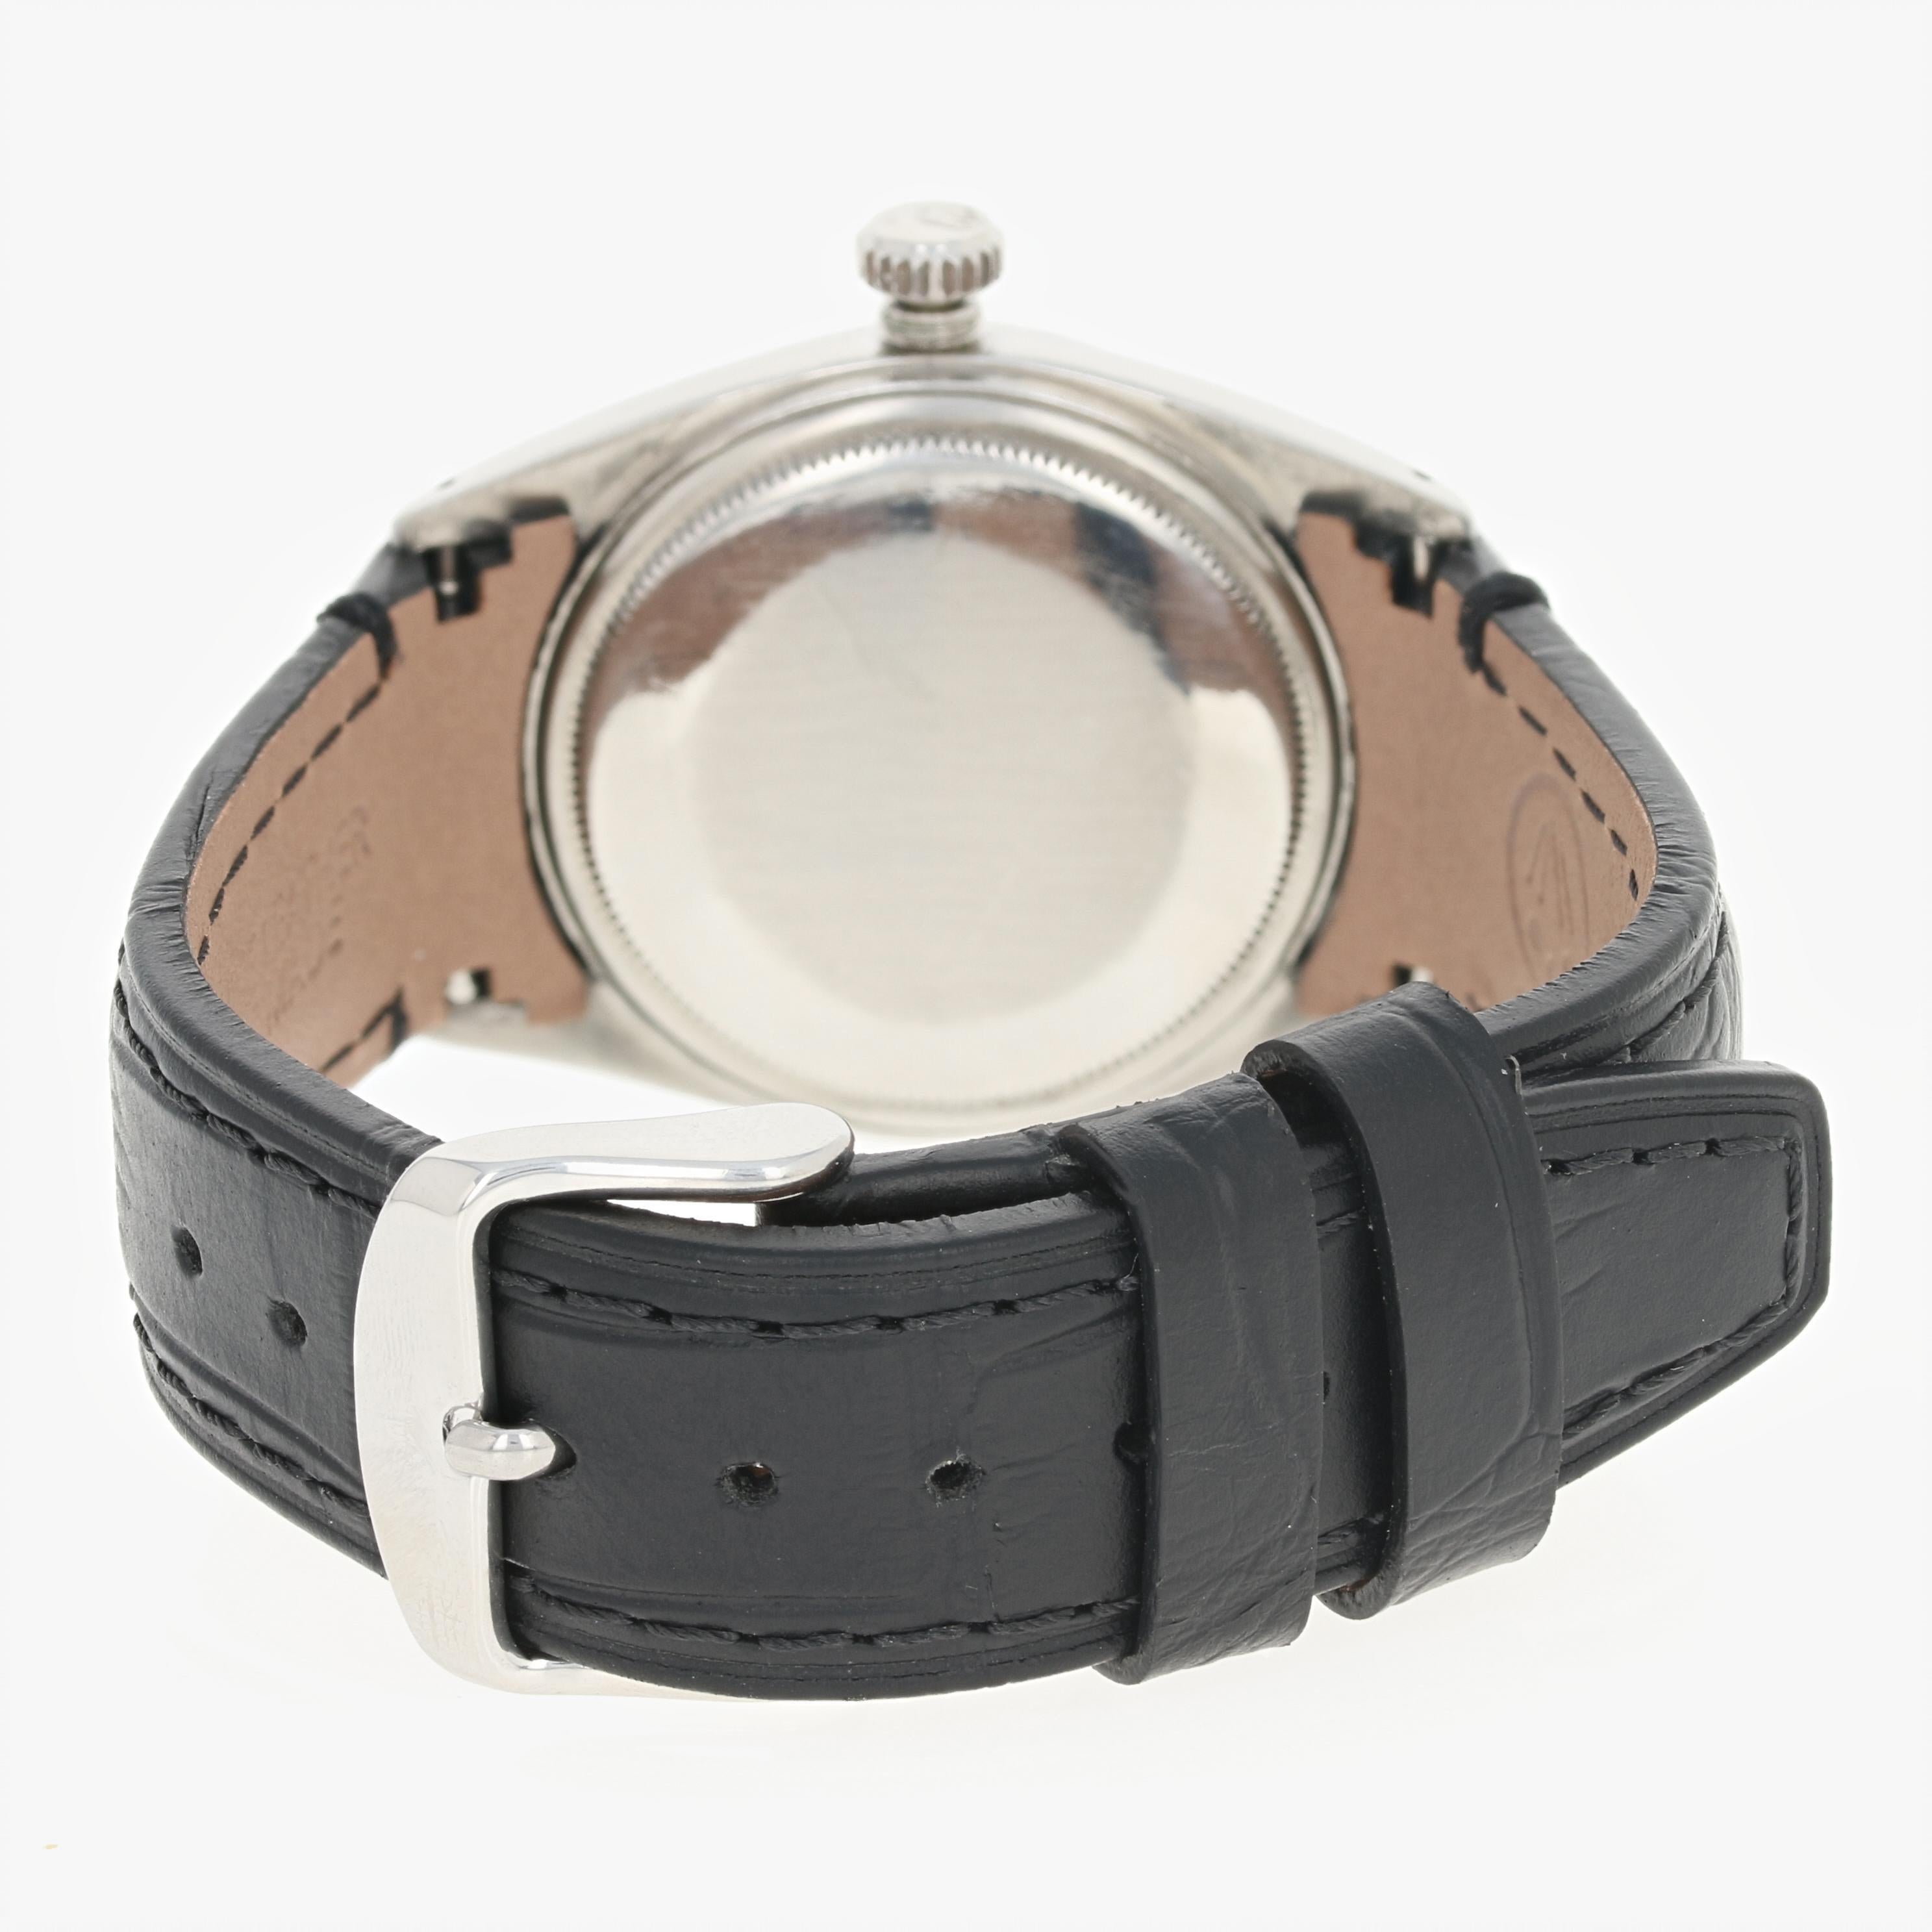 Rolex Oyster Perpetual Datejust Men's Watch, Stainless Steel 2Yr. Warranty 1603 1